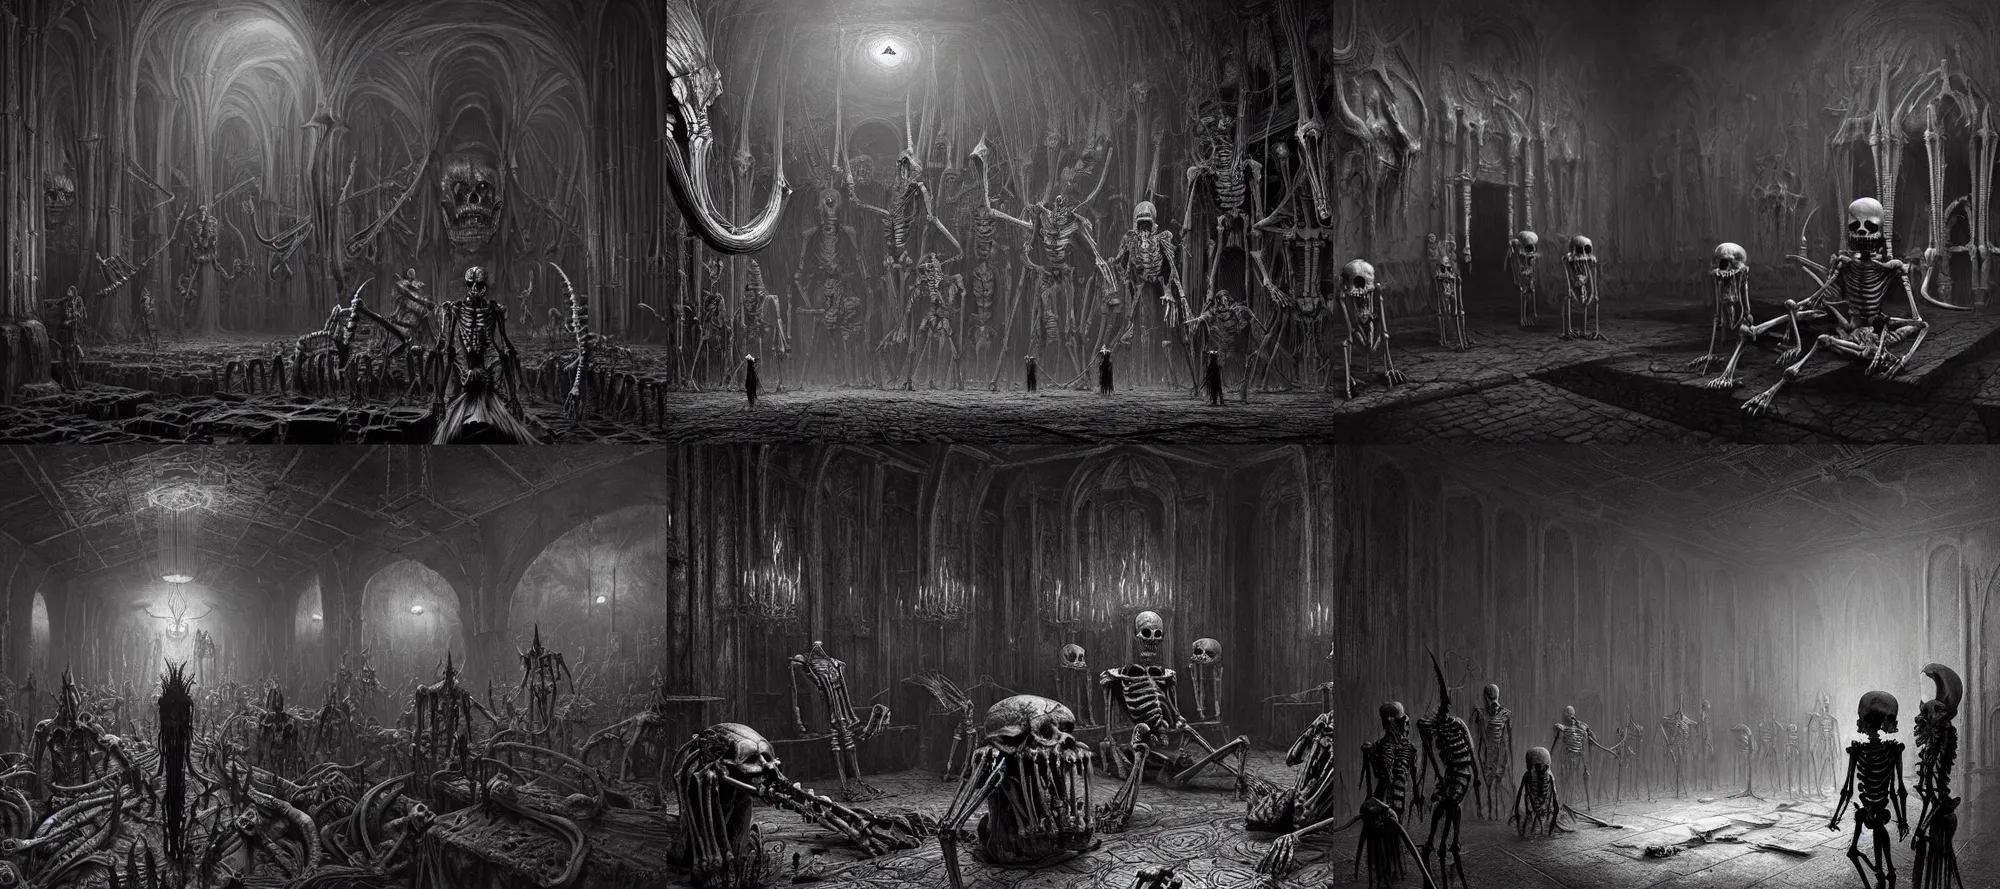 Prompt: room full of large demonic skeletons, dark atmosphere, artstation, trending, intricate lining, inspired by tormentum dark sorrow screenshot, by piotr ruszkowski, h. r. giger and zdzisław beksinski